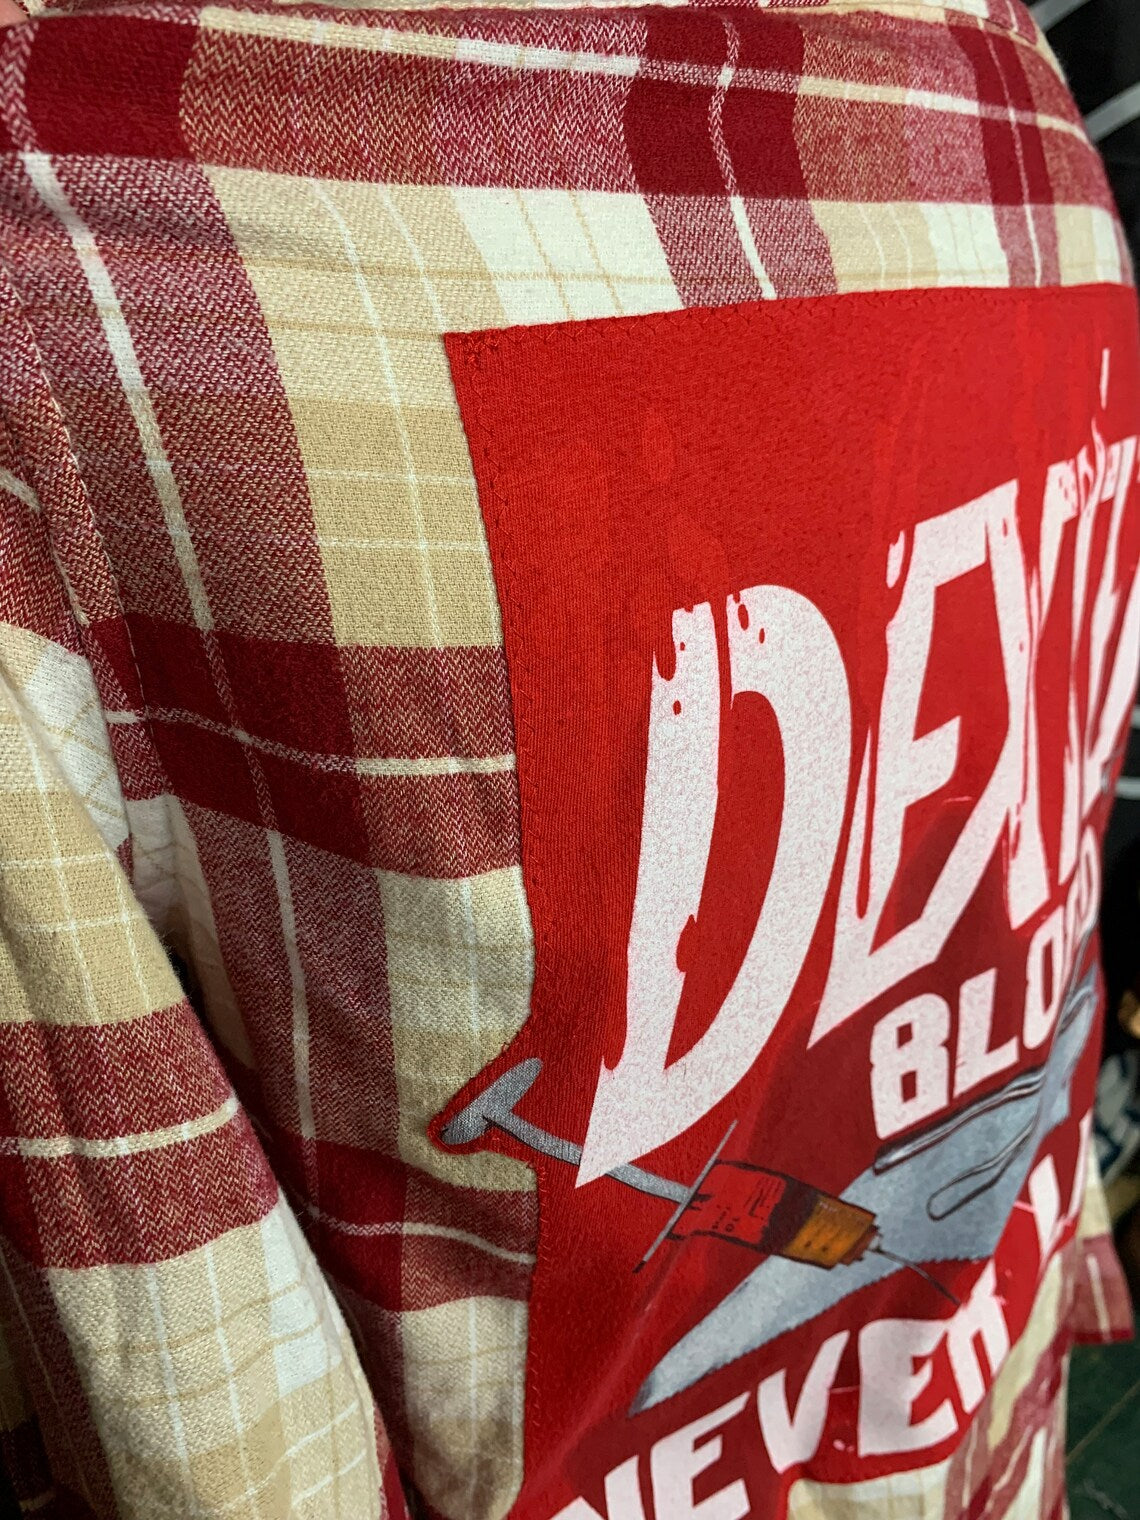 Dexter Flannel Shirt Custom Rework L